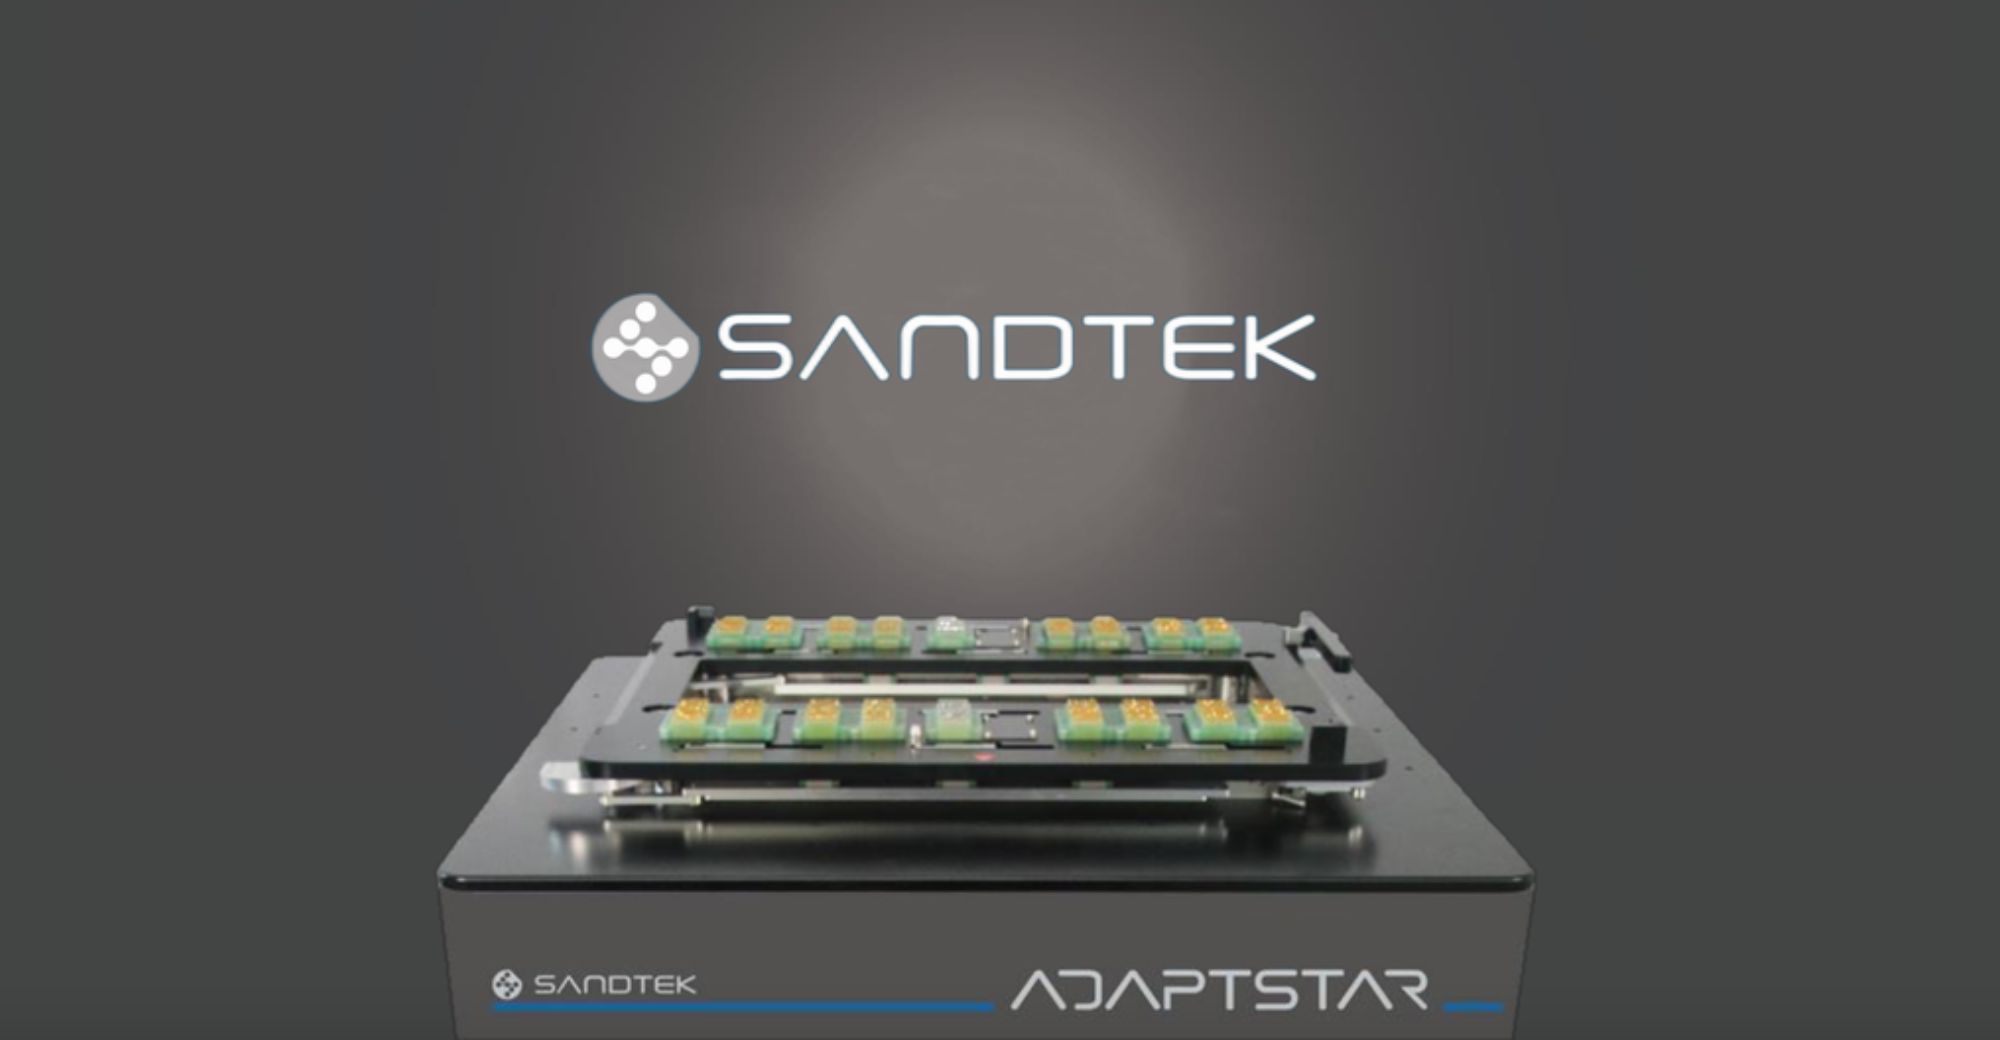 Фирма Sandtek, специализирующаяся на технологиях чипов, получает 100 млн юаней в Fresh Capital